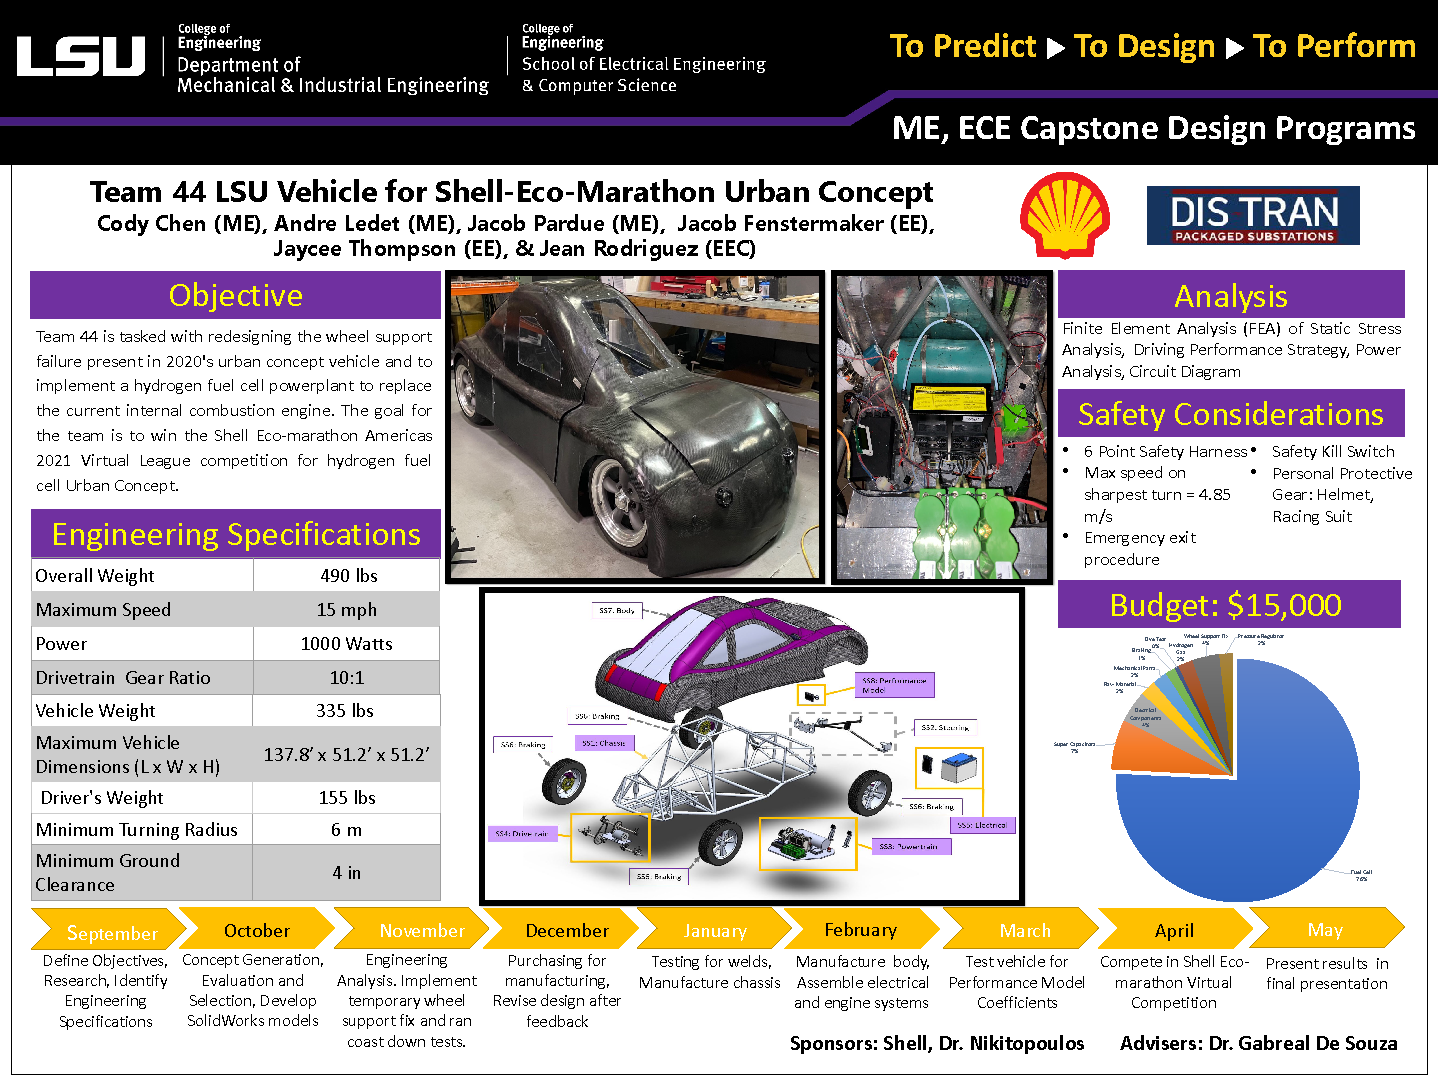 Project 44: LSU Vehicle for Shell Eco-marathon Americas 2021 - UrbanConcept (2021)